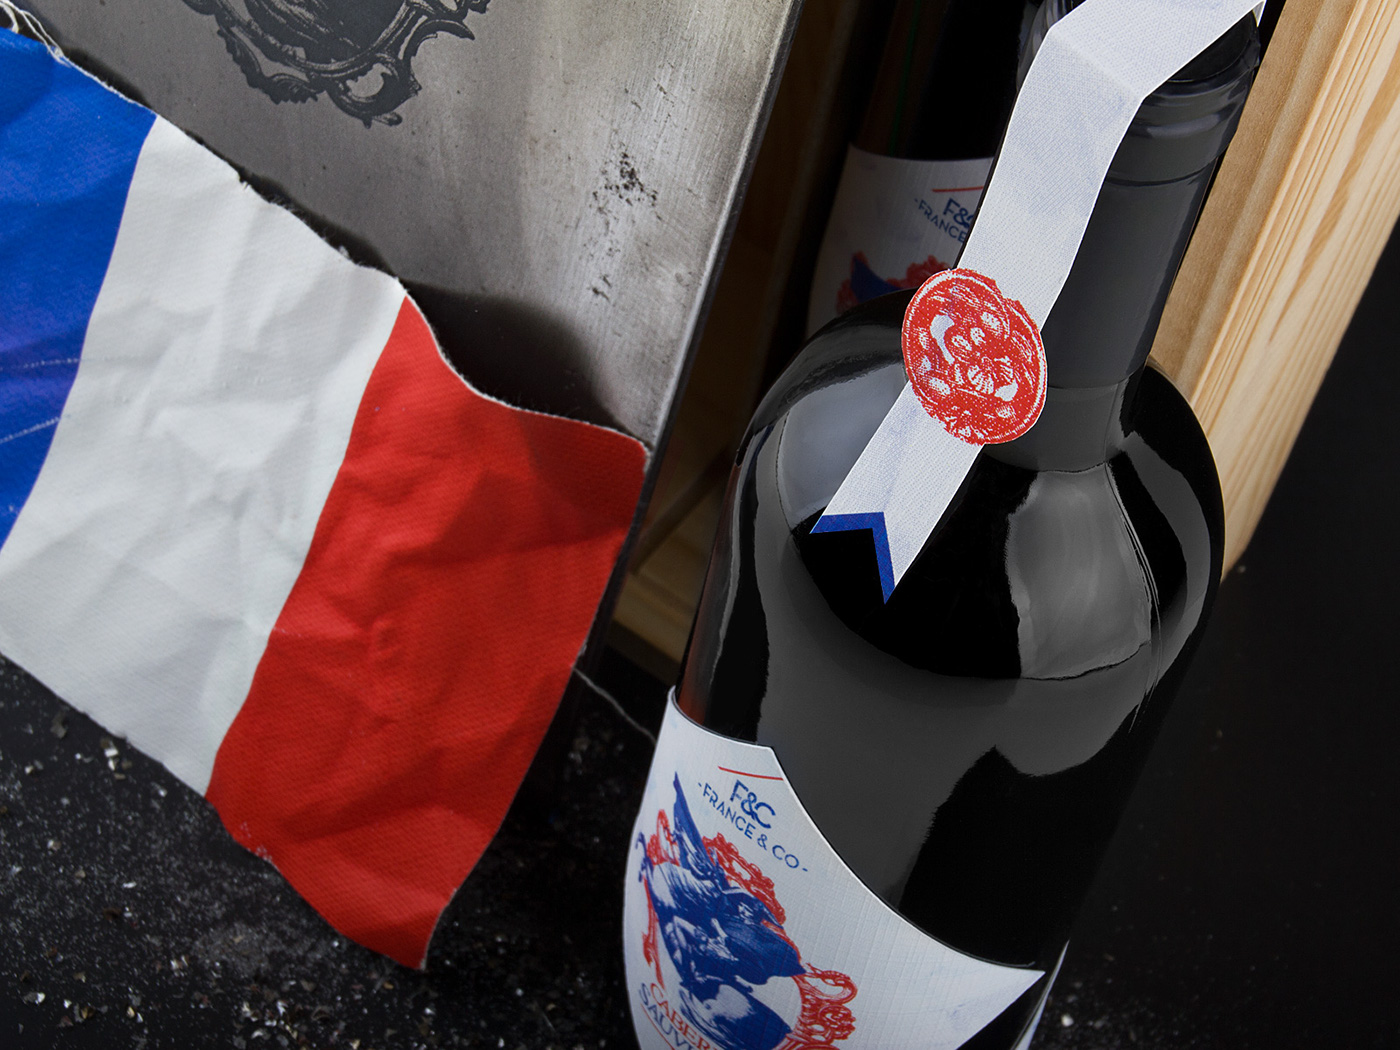 France&Co wine francia historia botella packaging wine French identity branding wine grantipo king rey chovinismo Bandera Selecto